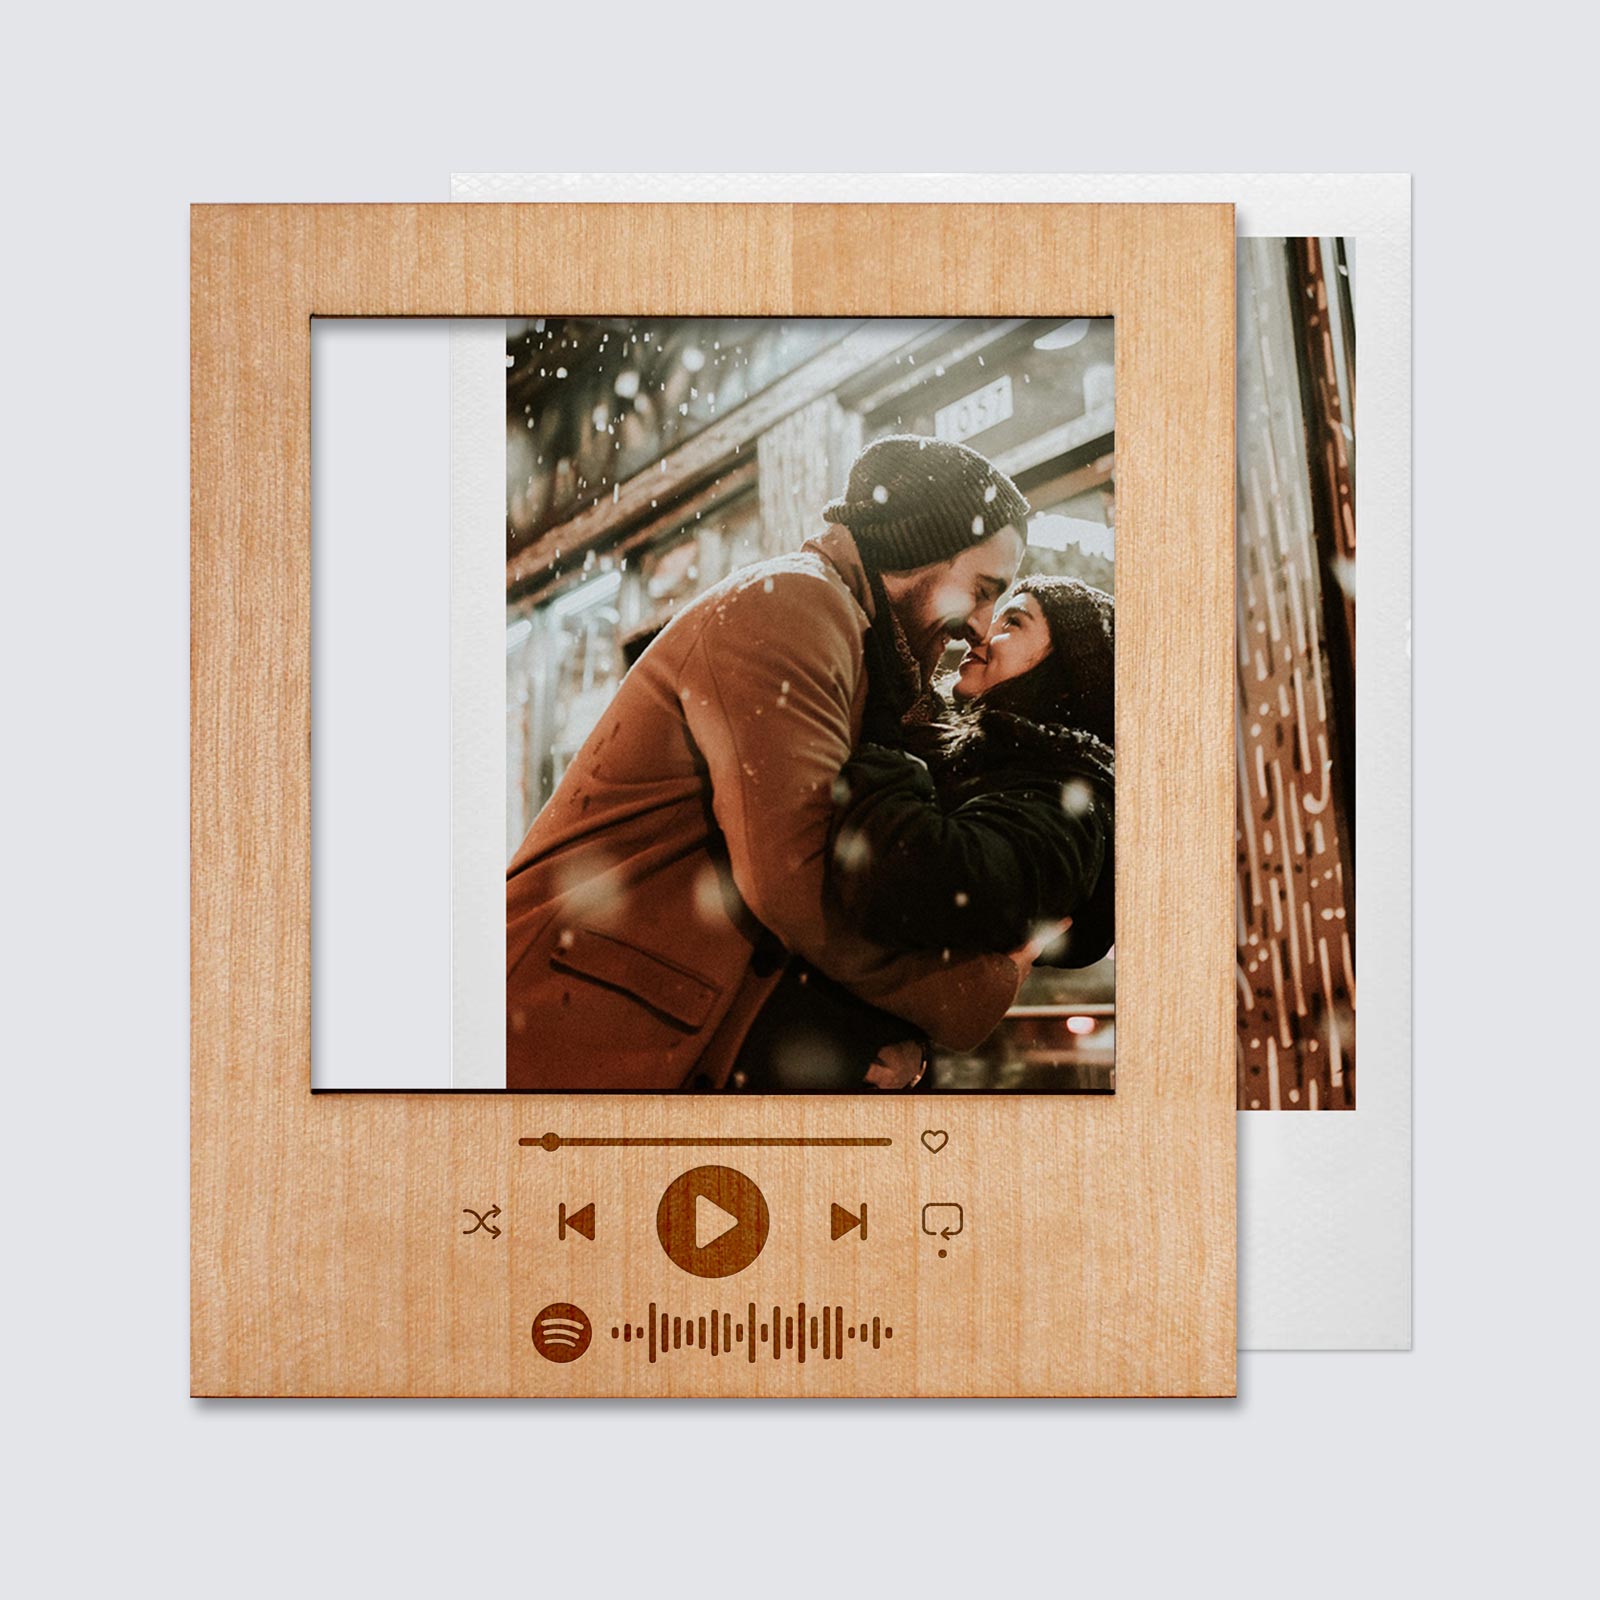 Marco Spotify polaroid magnético personalizado madera formato